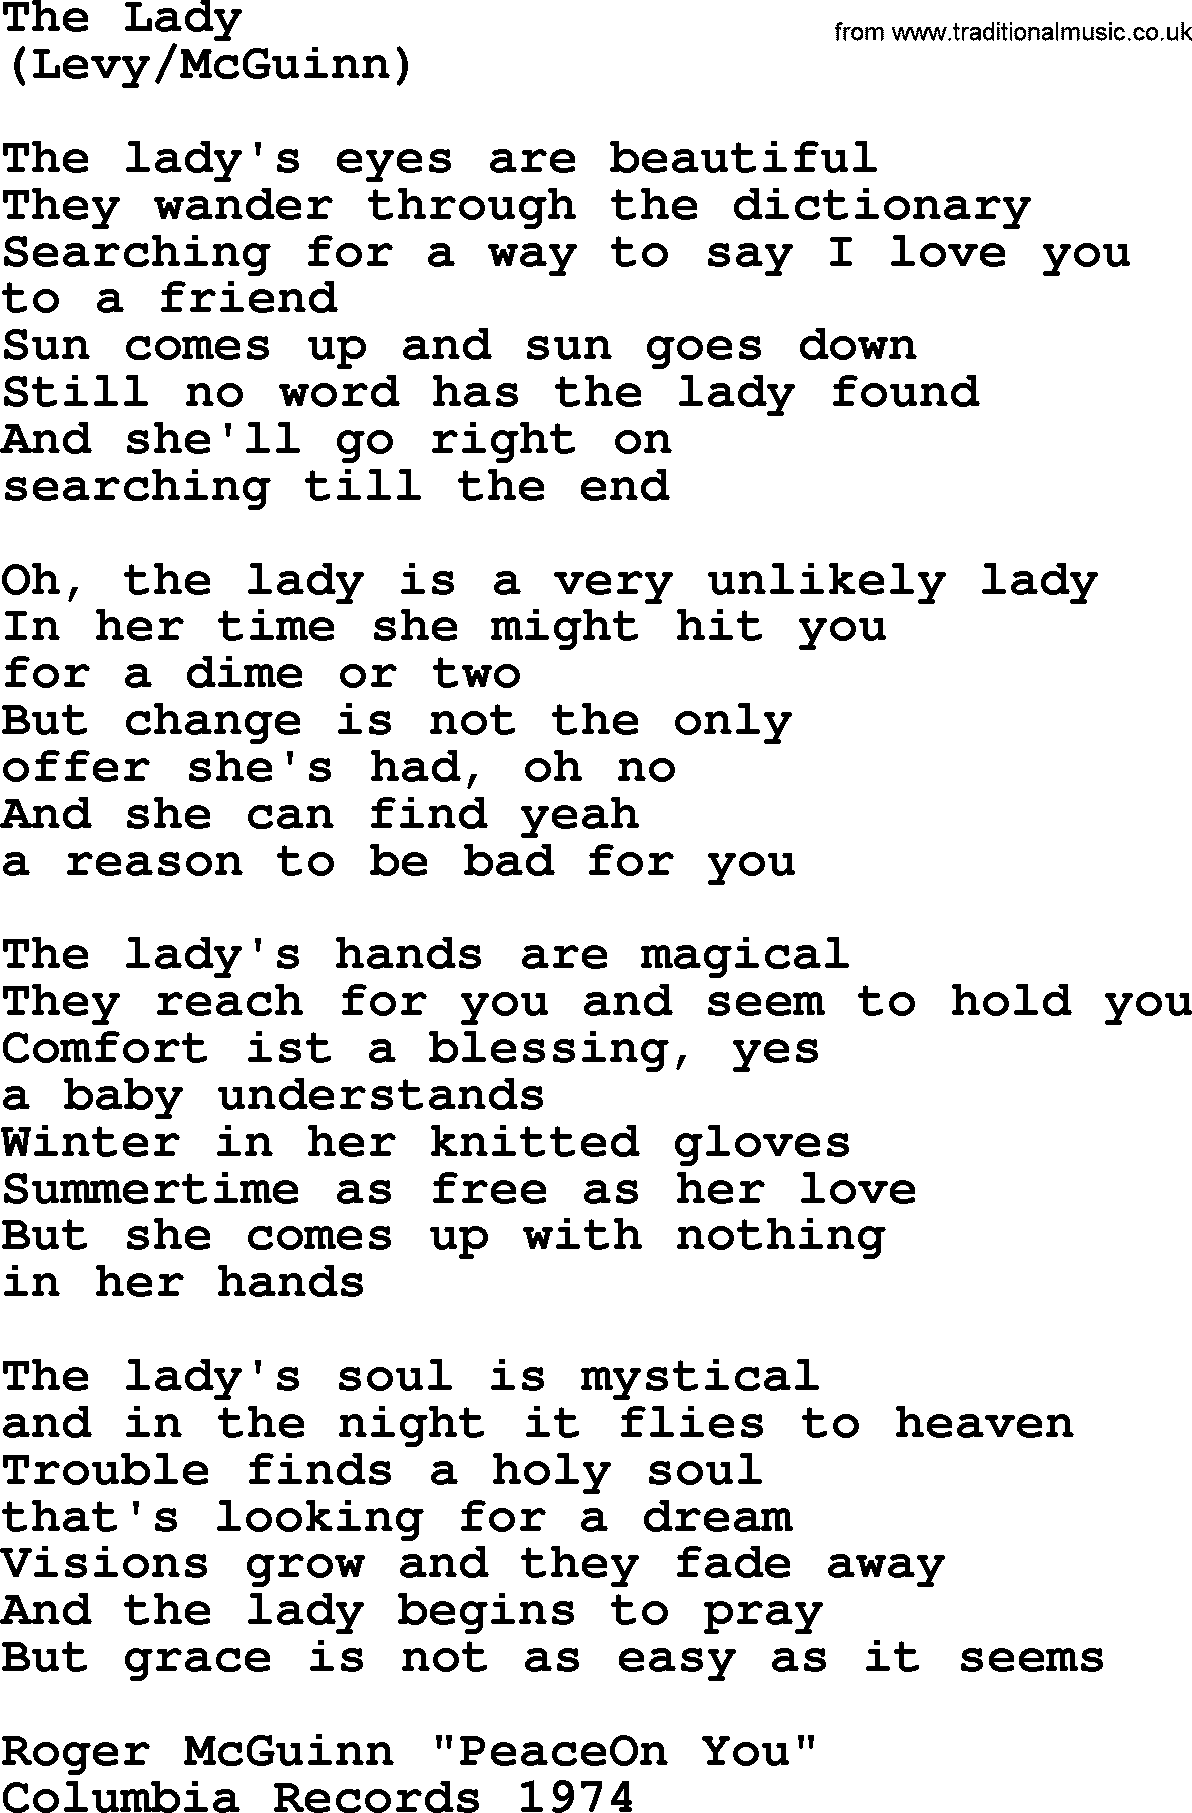 The Byrds song The Lady, lyrics